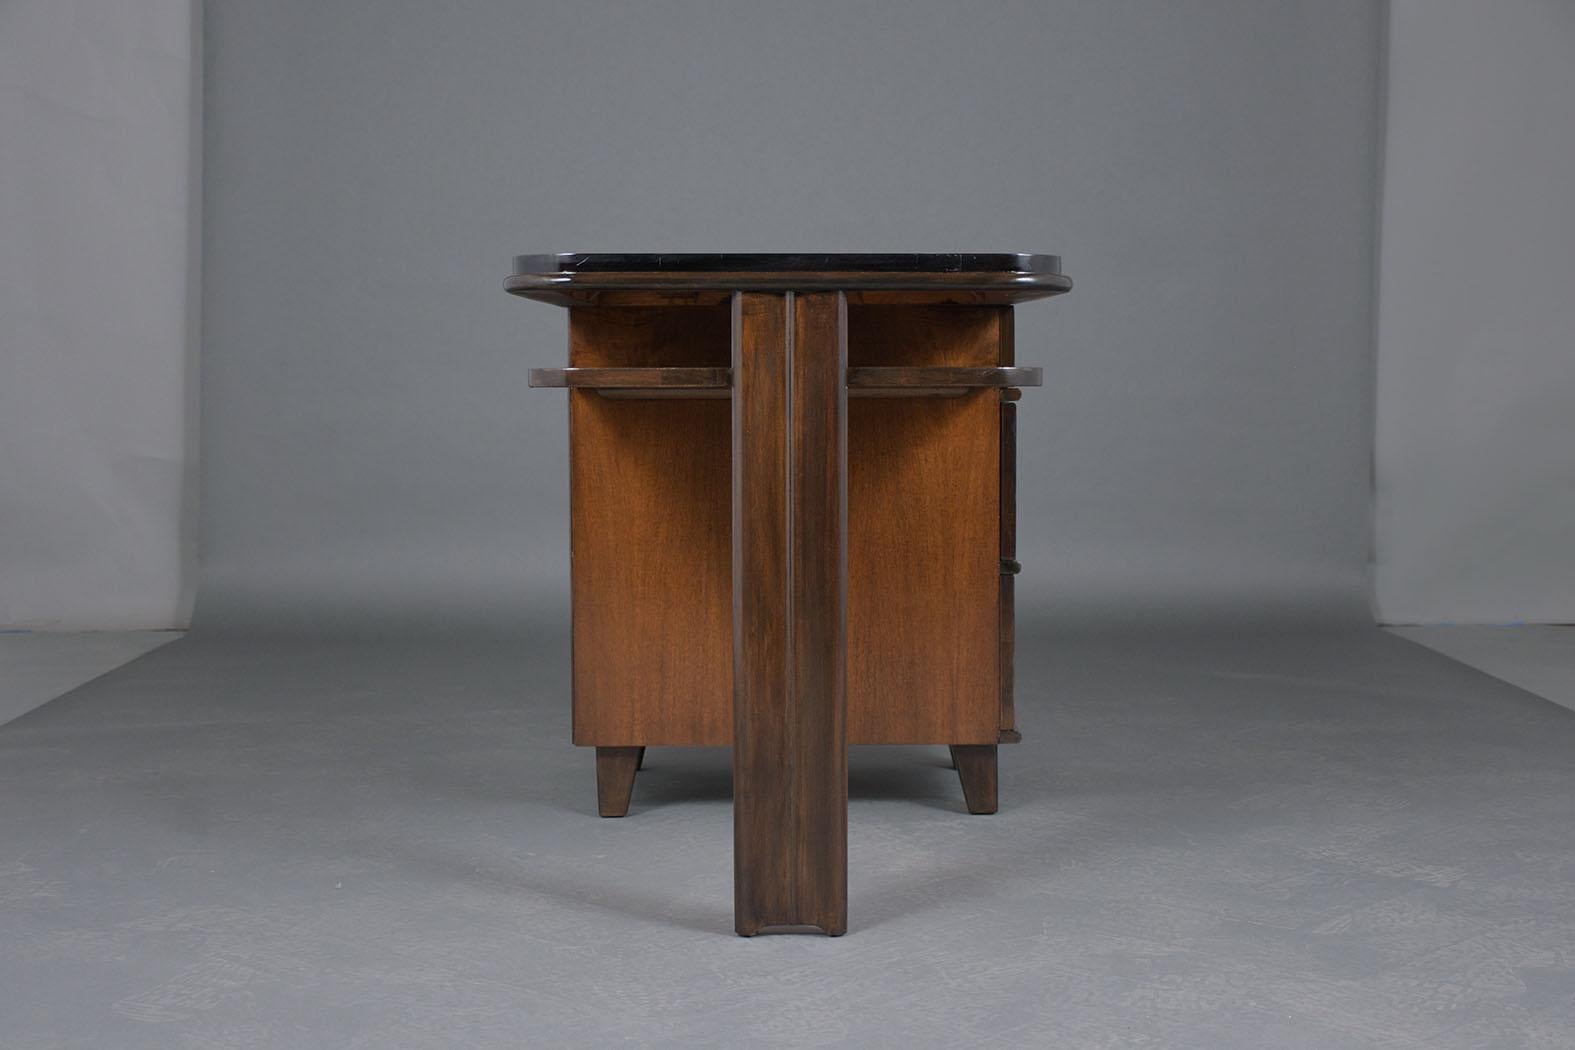 1950s Art Deco Pedestal Desk in Walnut & Ebonized Finish with Brass Accents For Sale 8